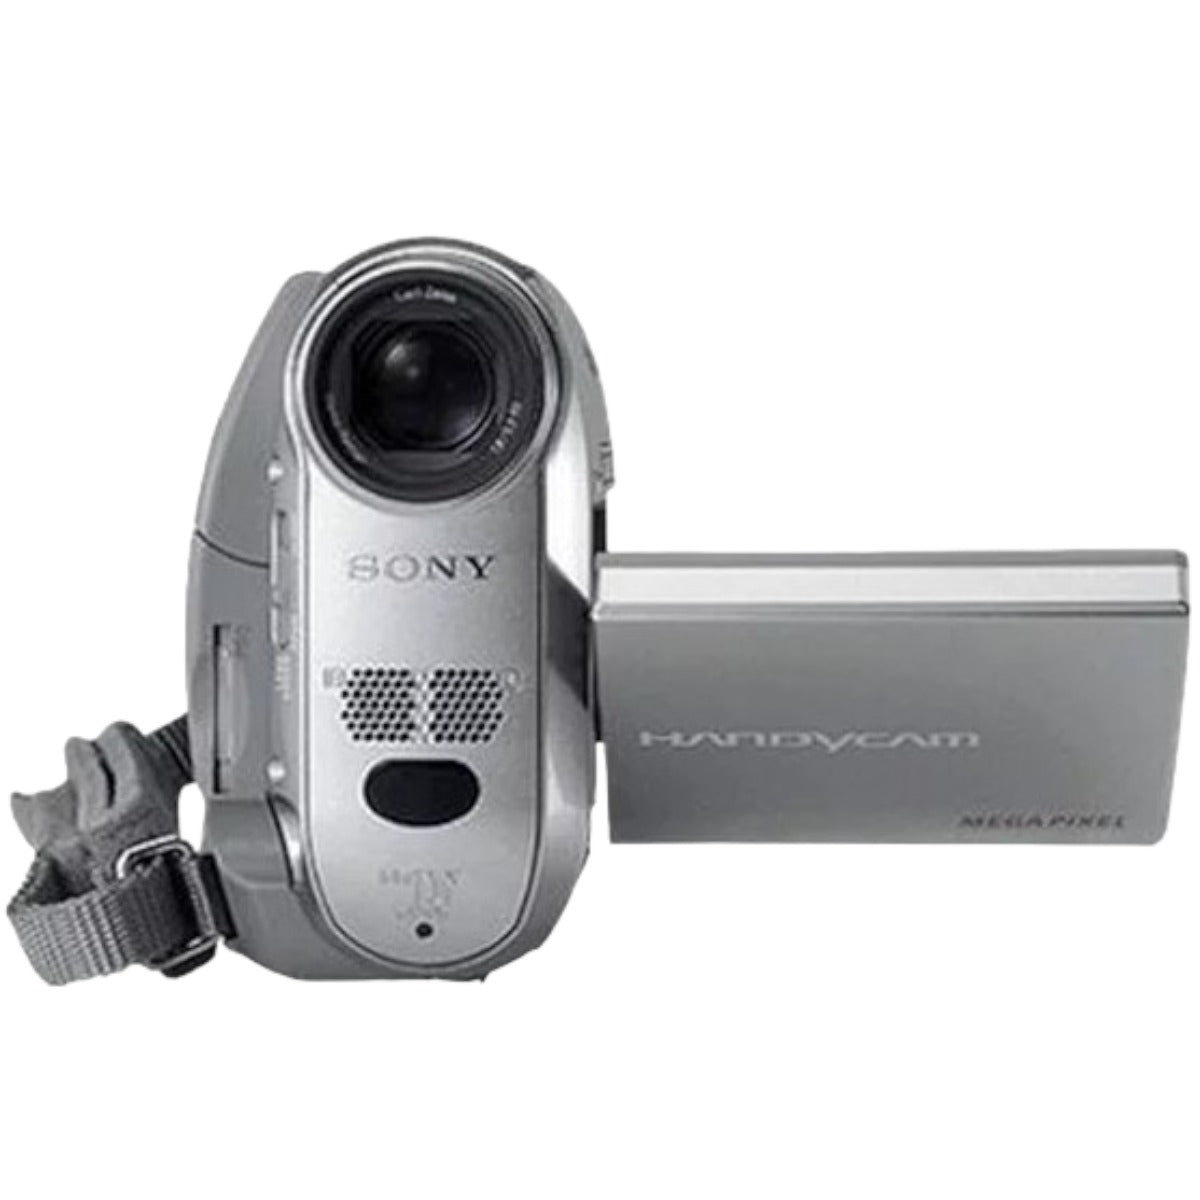 Sony Handycam DCR-HC40 Mini DV Camcorder